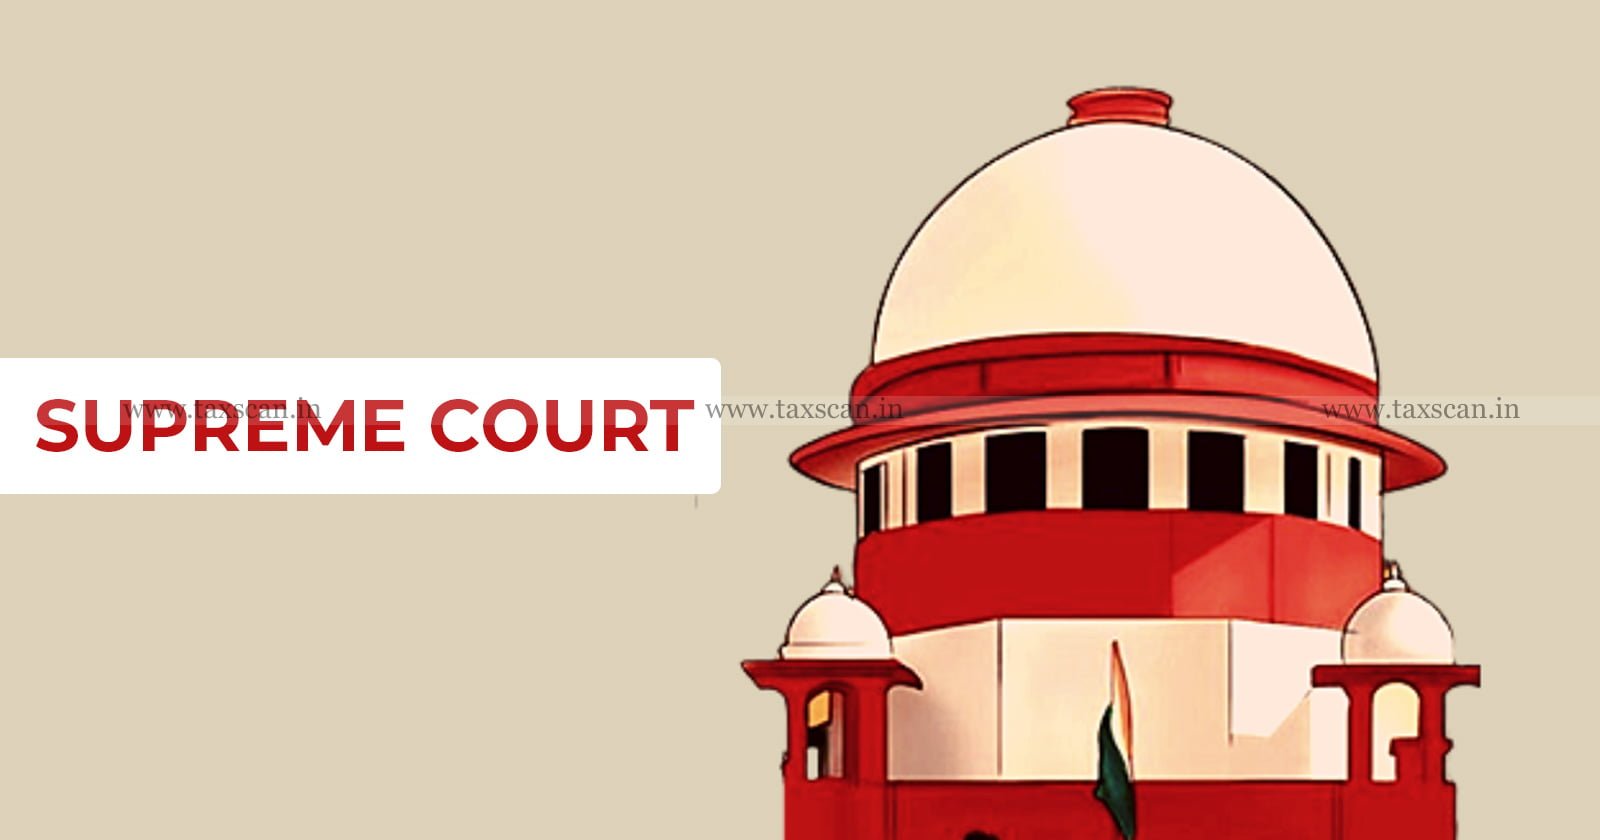 Bail - Deposit - ITC - FIR - GST - Liability - Supreme - Court - TAXSCAN